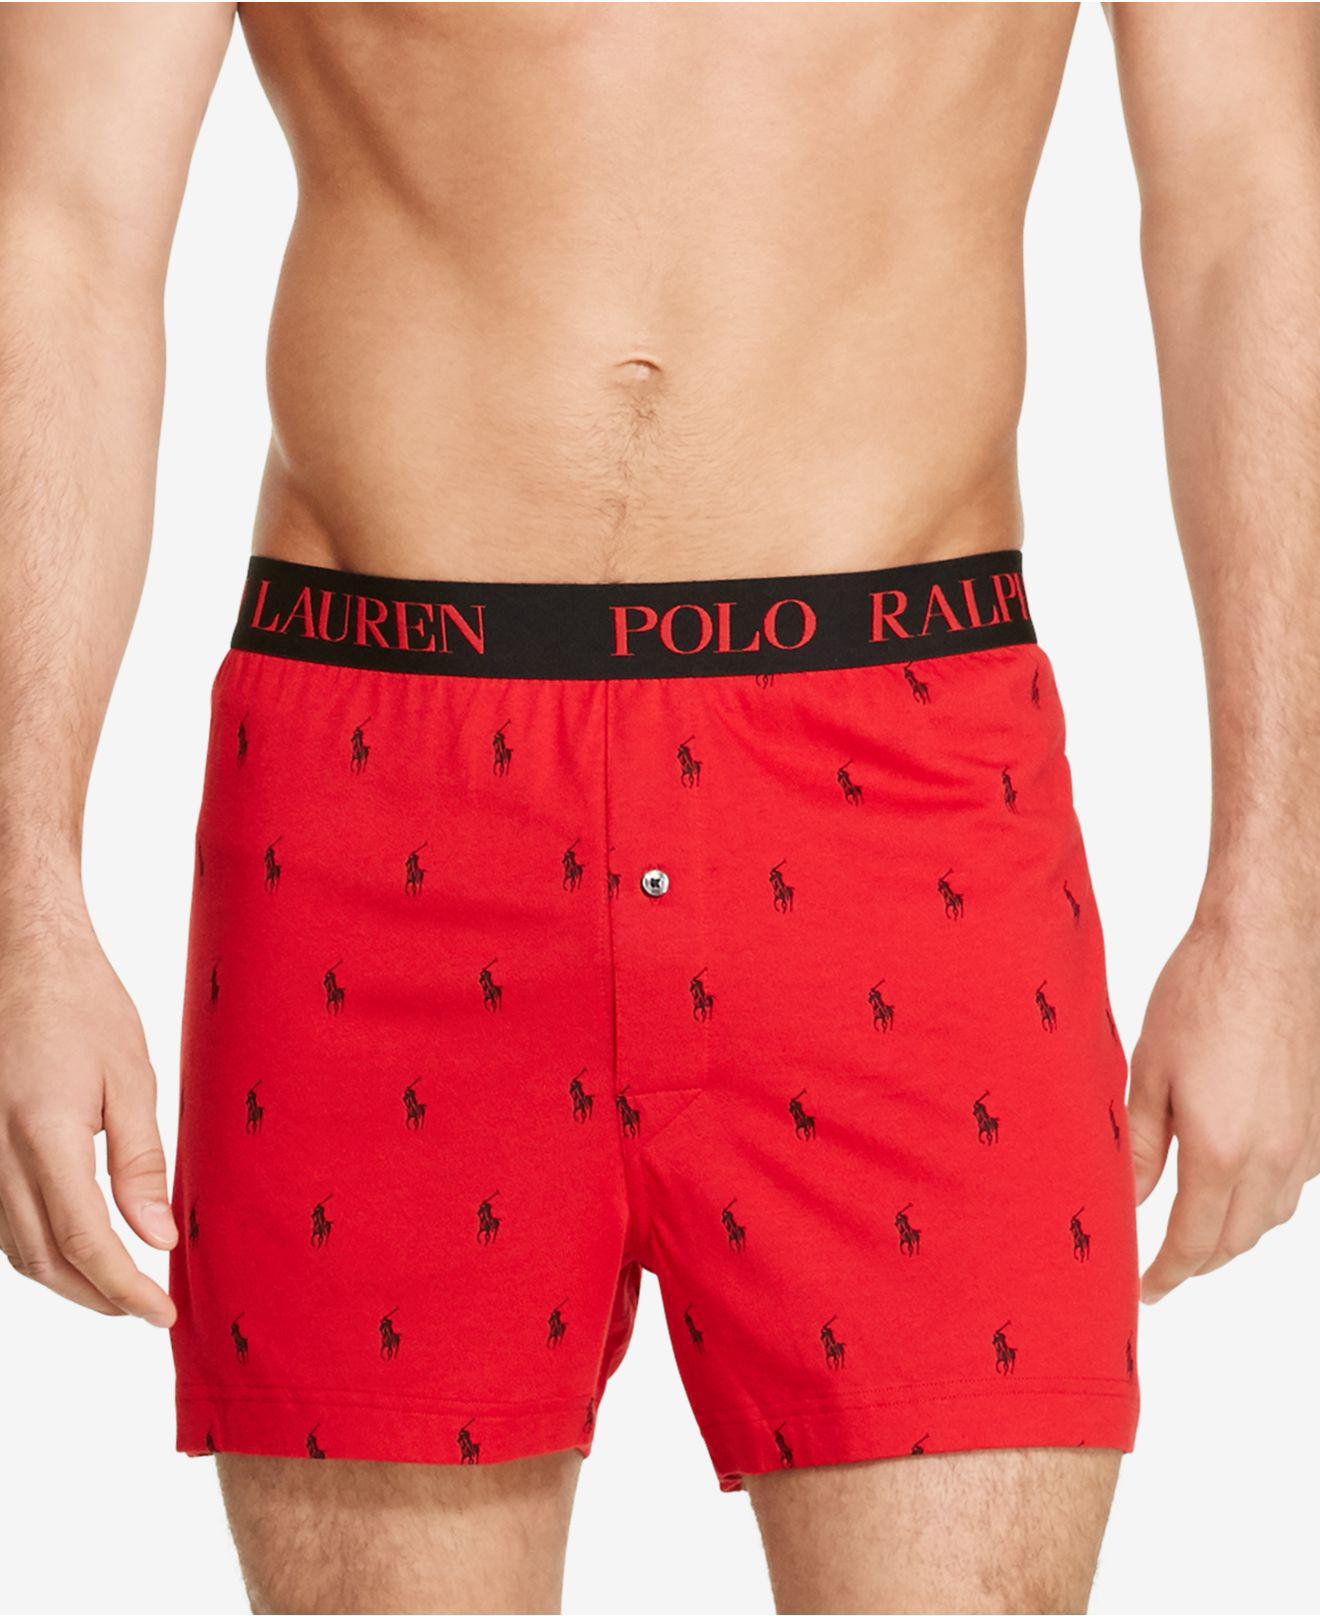 Lyst - Polo Ralph Lauren Men's Knit Boxer in Red for Men